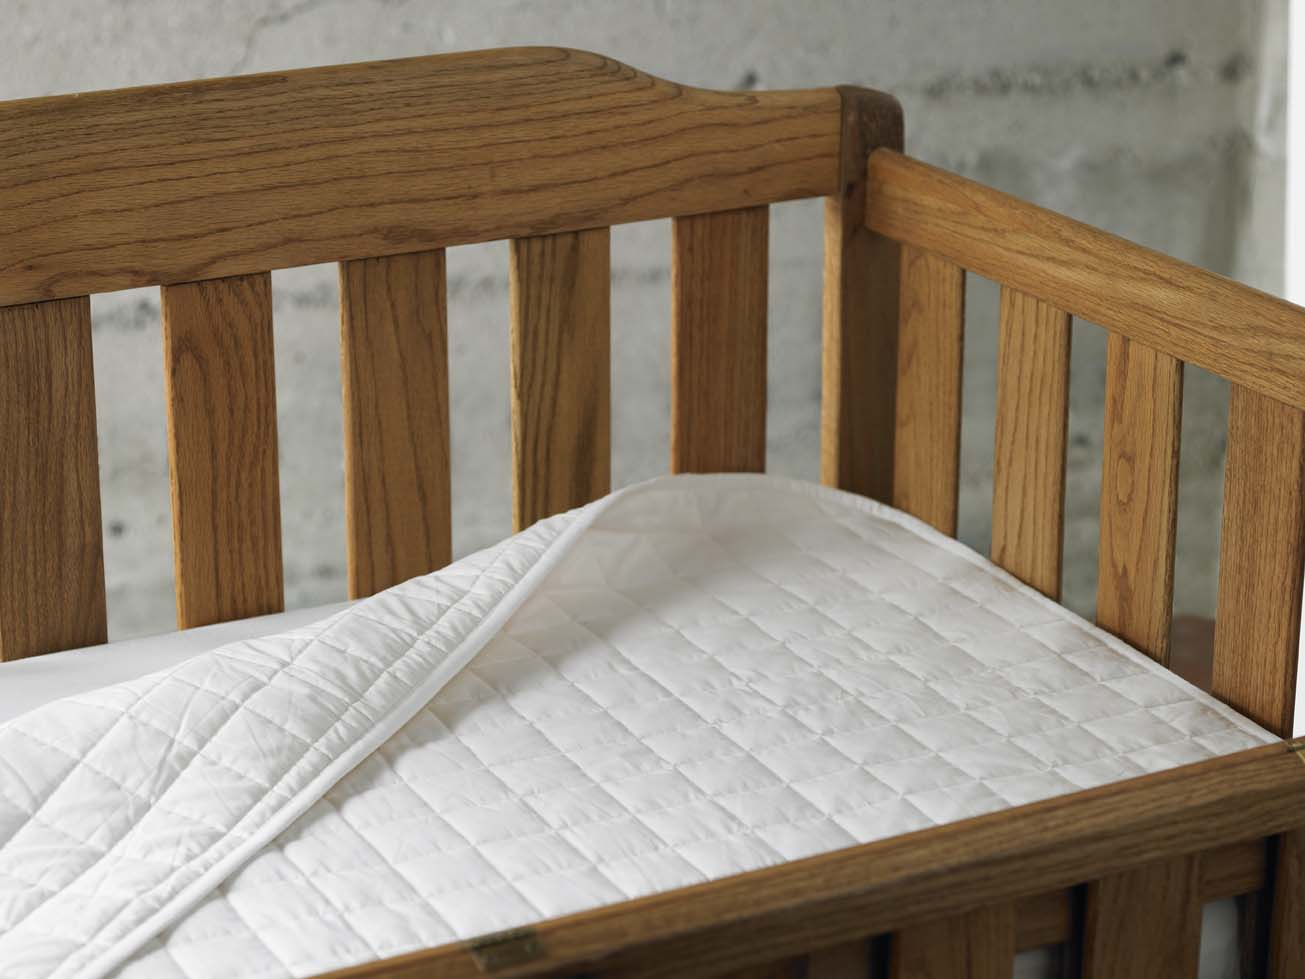 pba material crib mattress